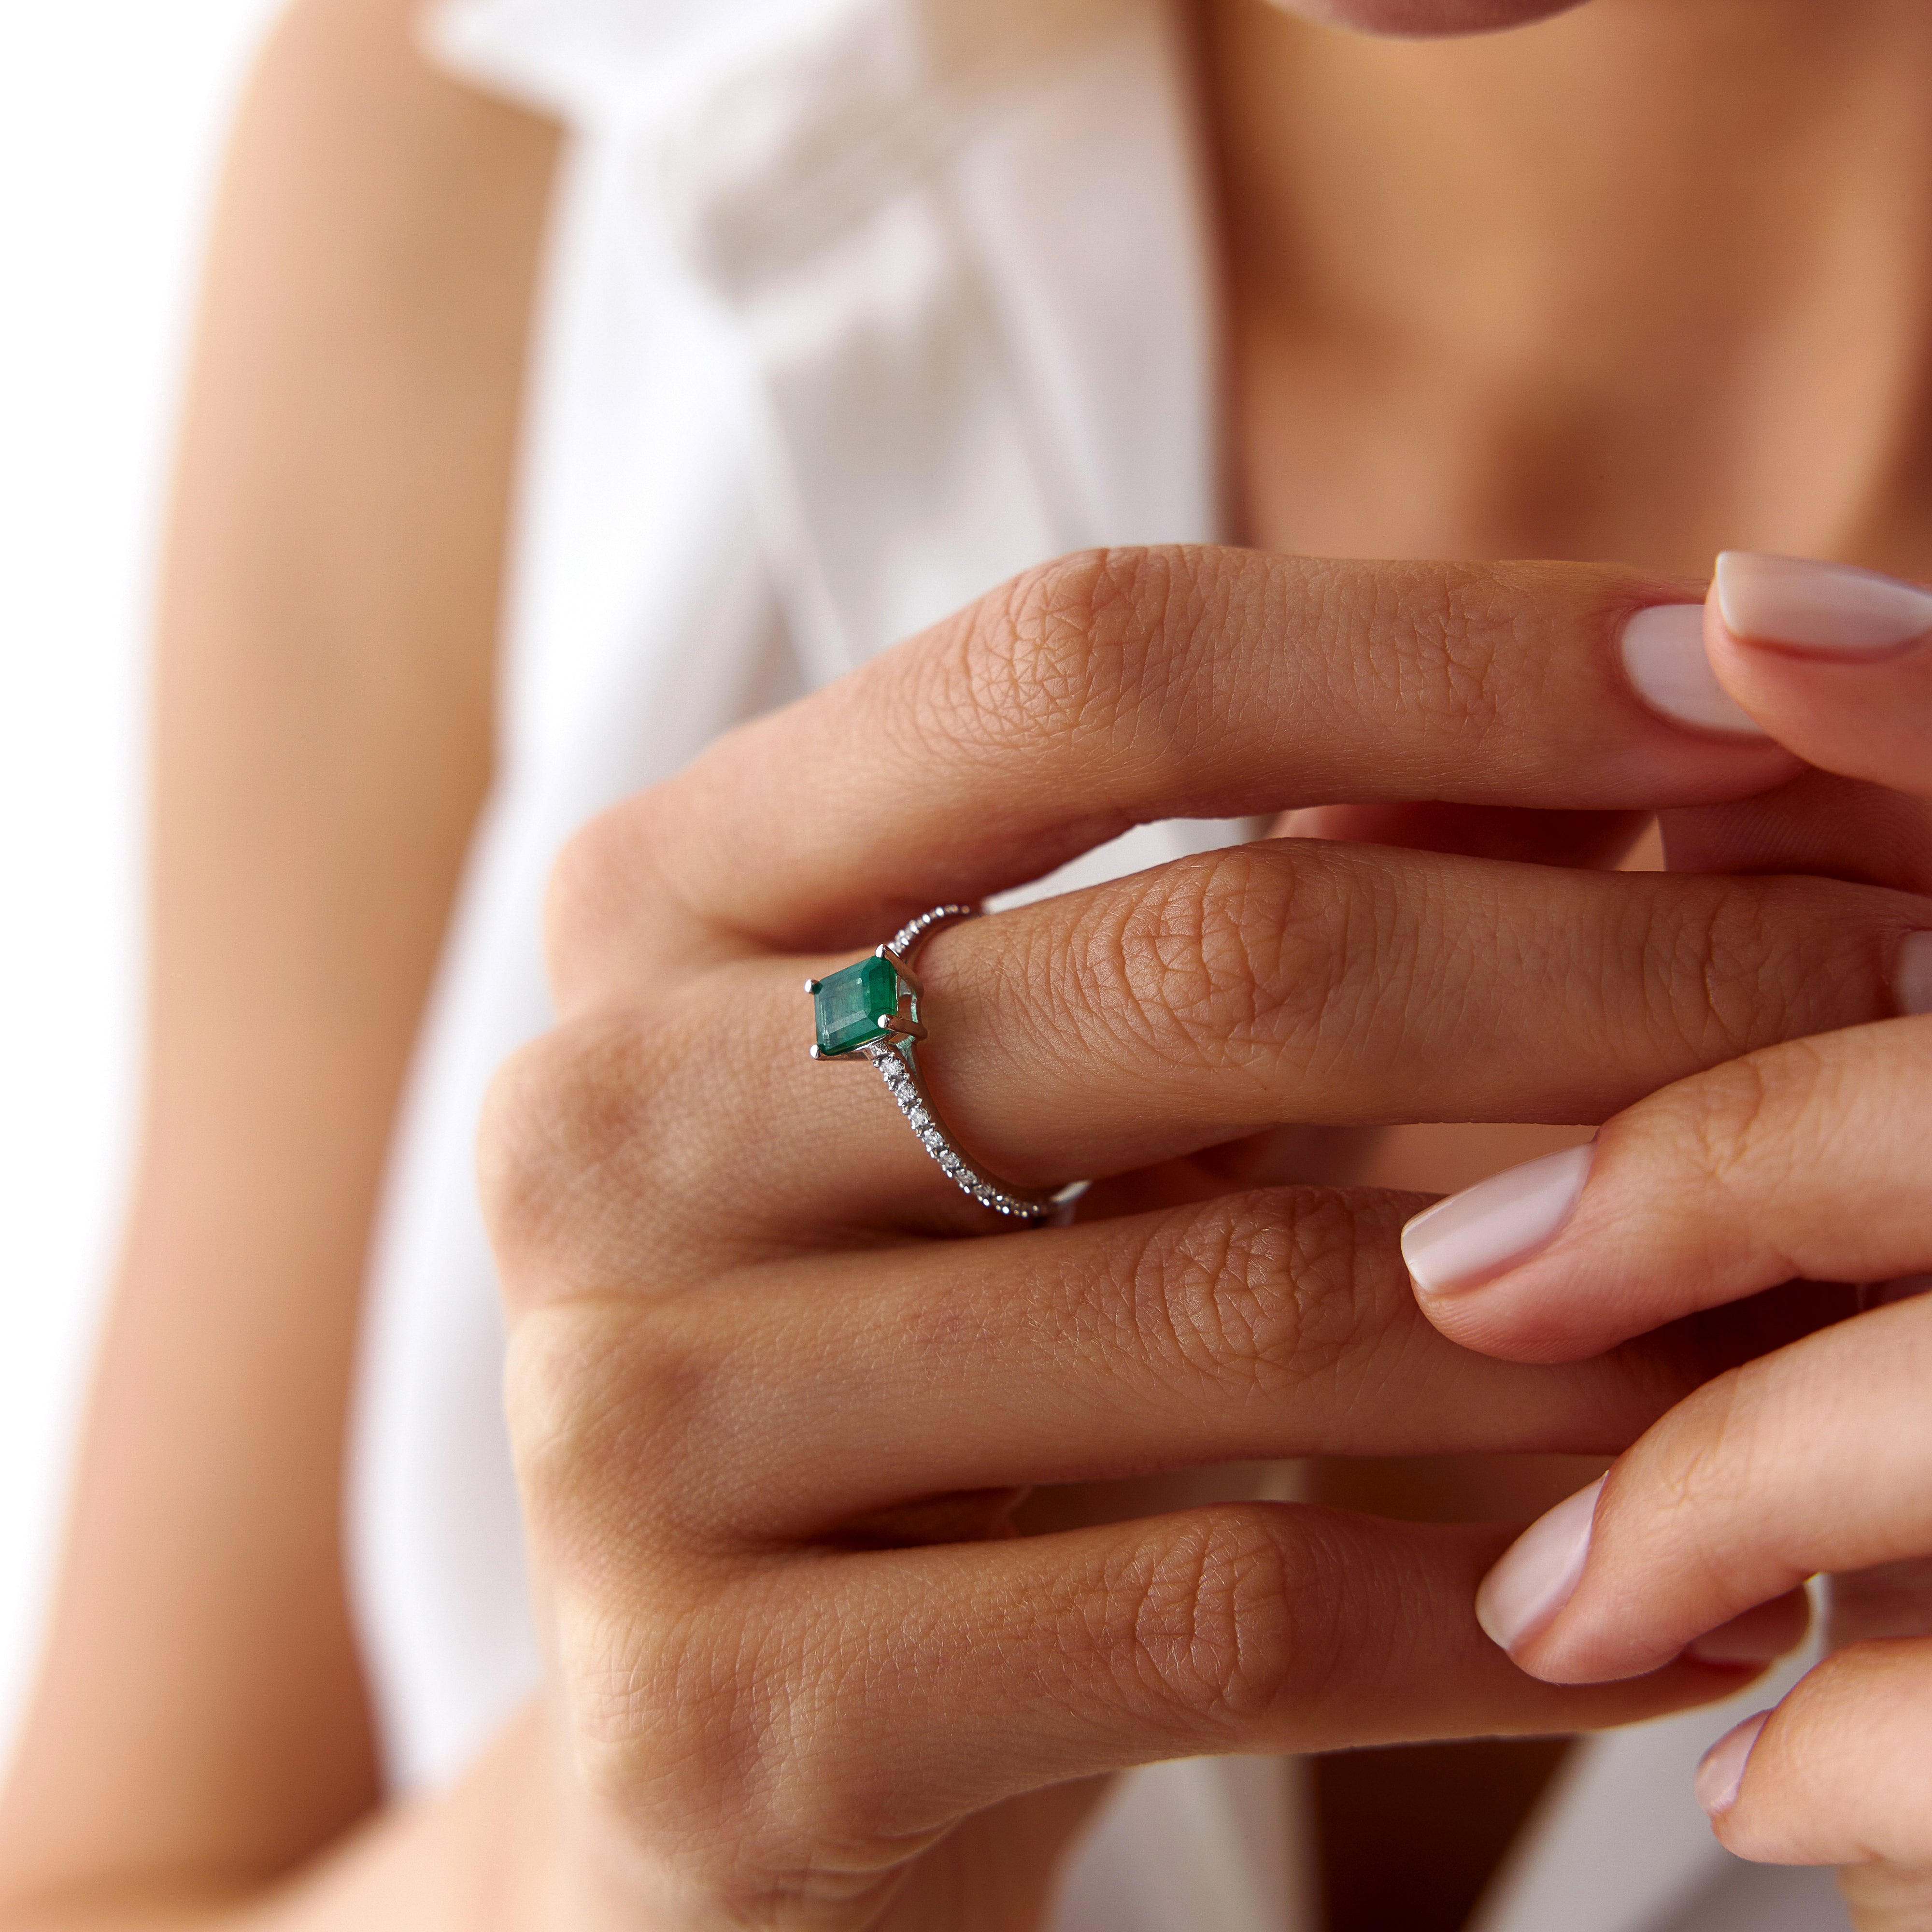 Emerald Cut Emerald and Diamond Ring in 14K Gold